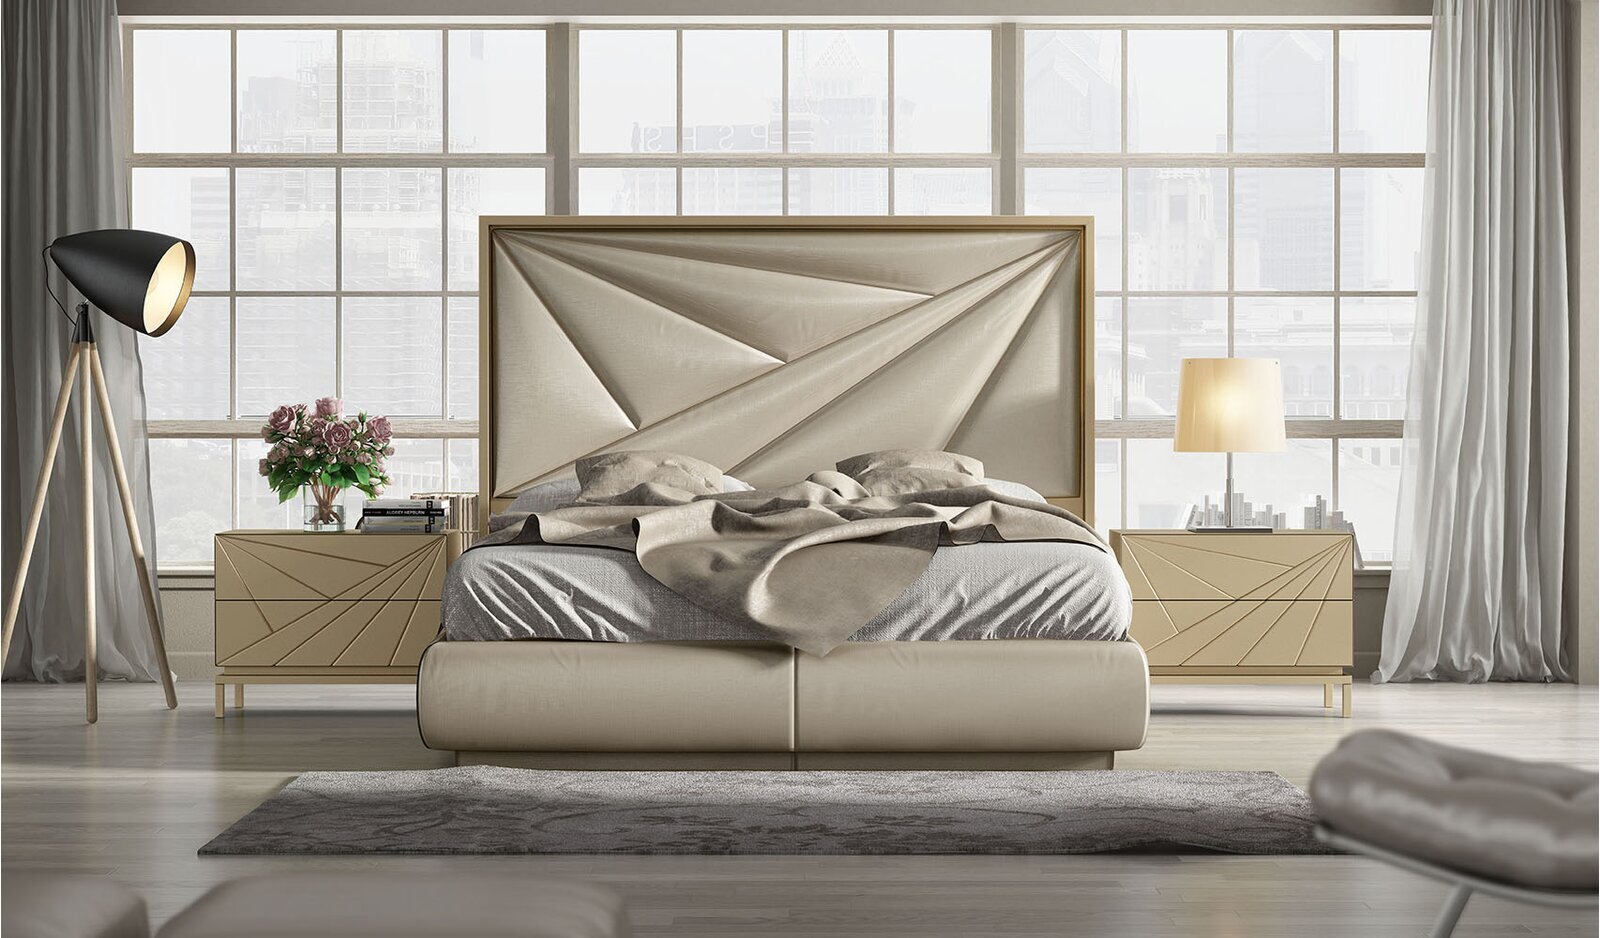 Upholstered geometric 1930s art deco bedroom furniture